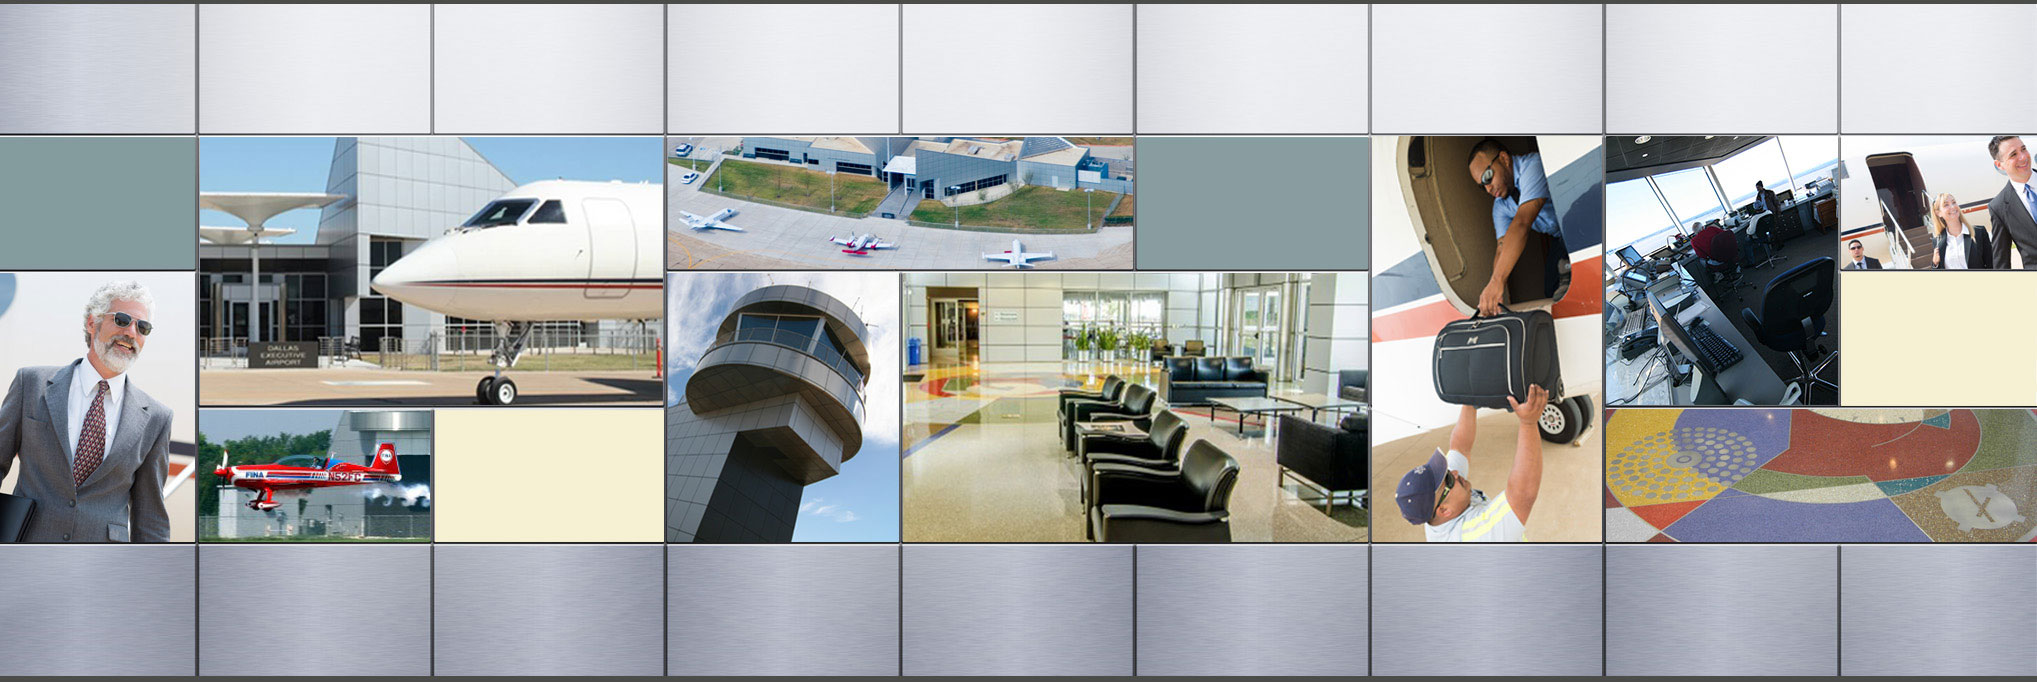 Dallas Executive Airport, terminal, control tower, airplanes, baggage